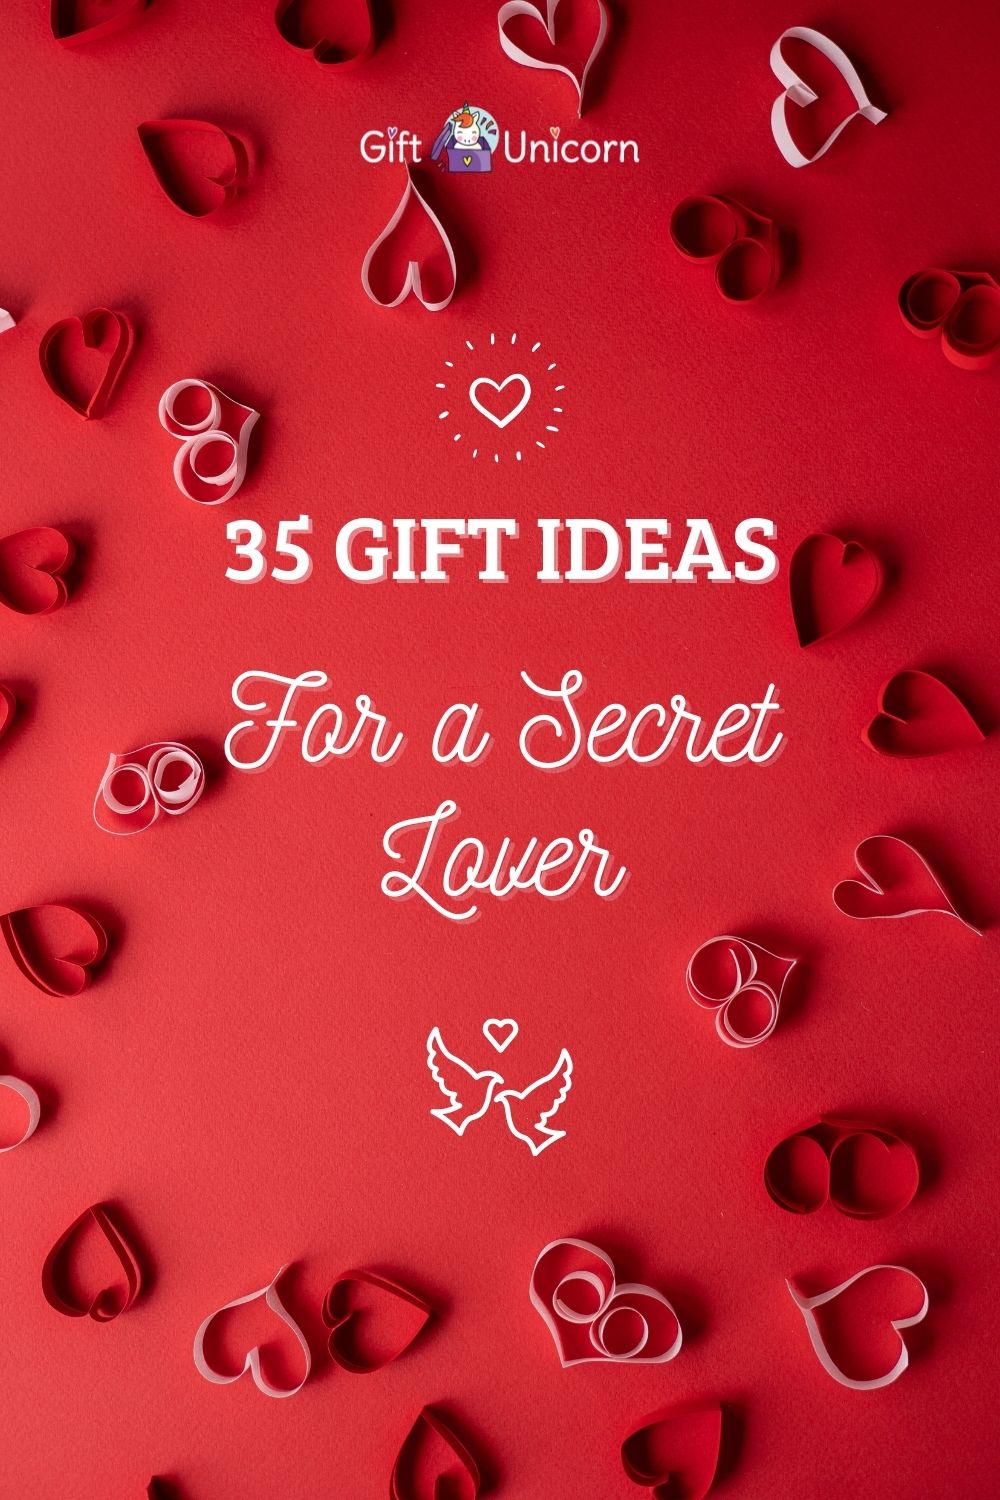 35 Unique Gift Ideas for a Secret Lover - pinterest pin image